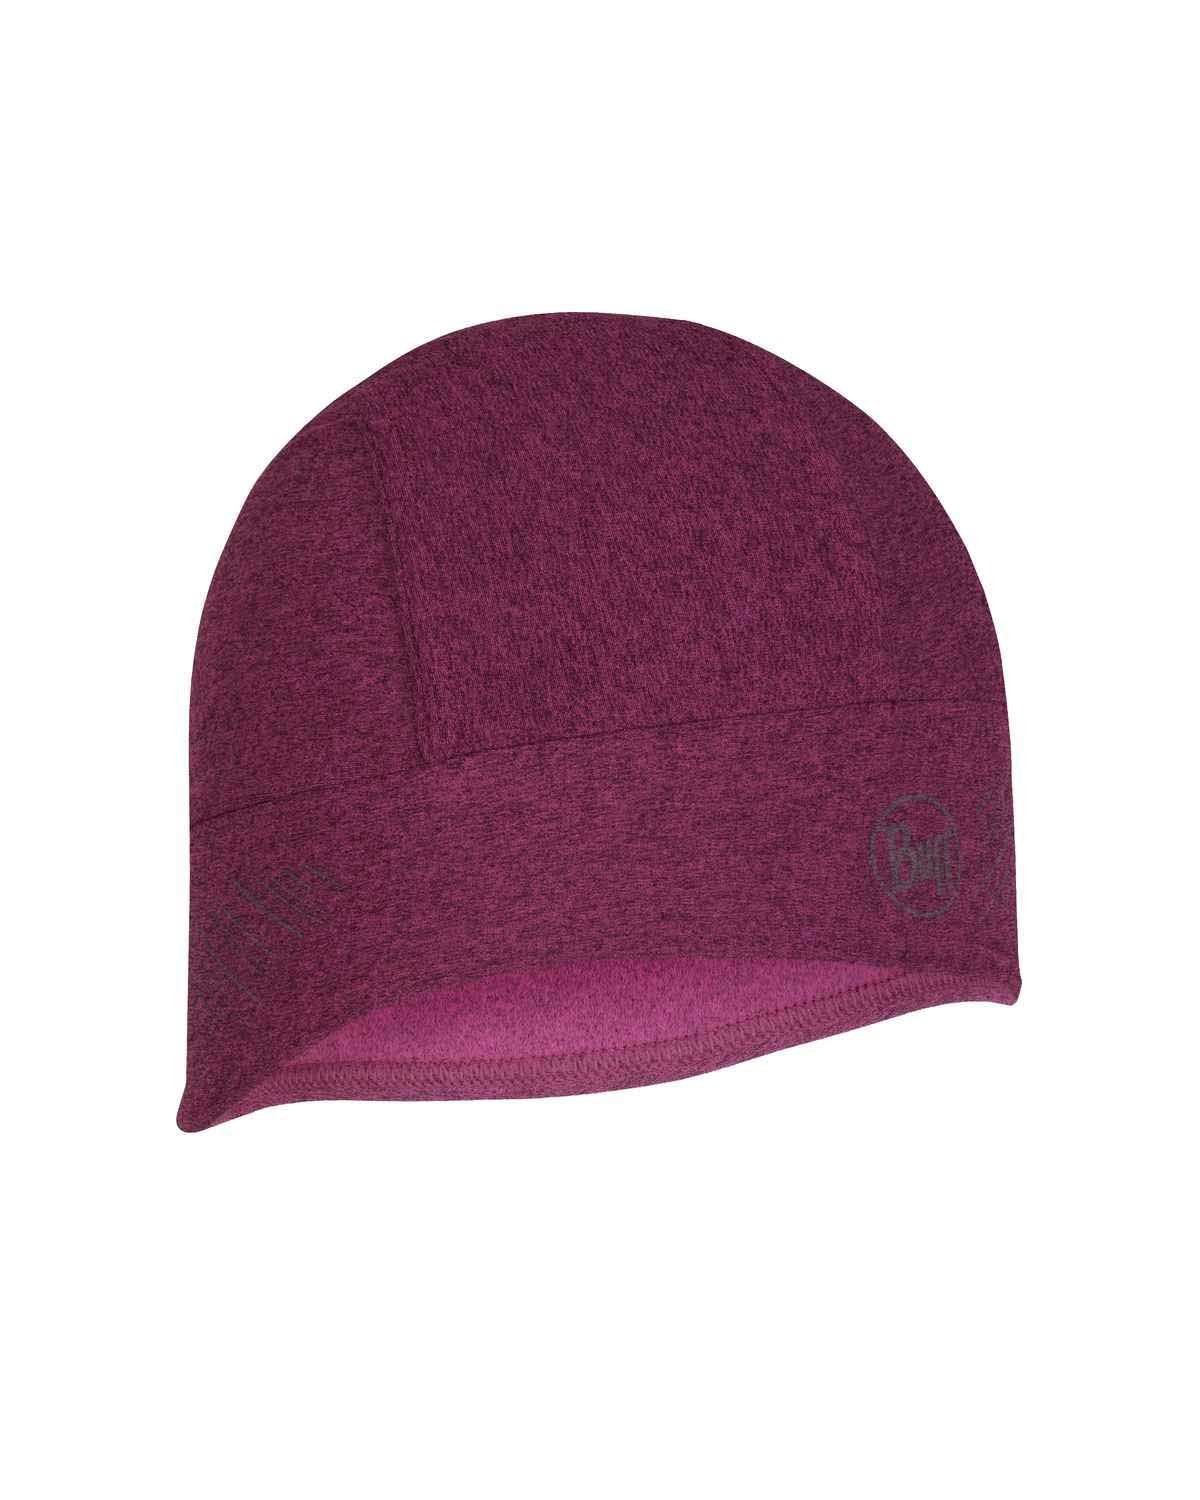 Шапка Buff Tech fleece hat R_pink - фото 1